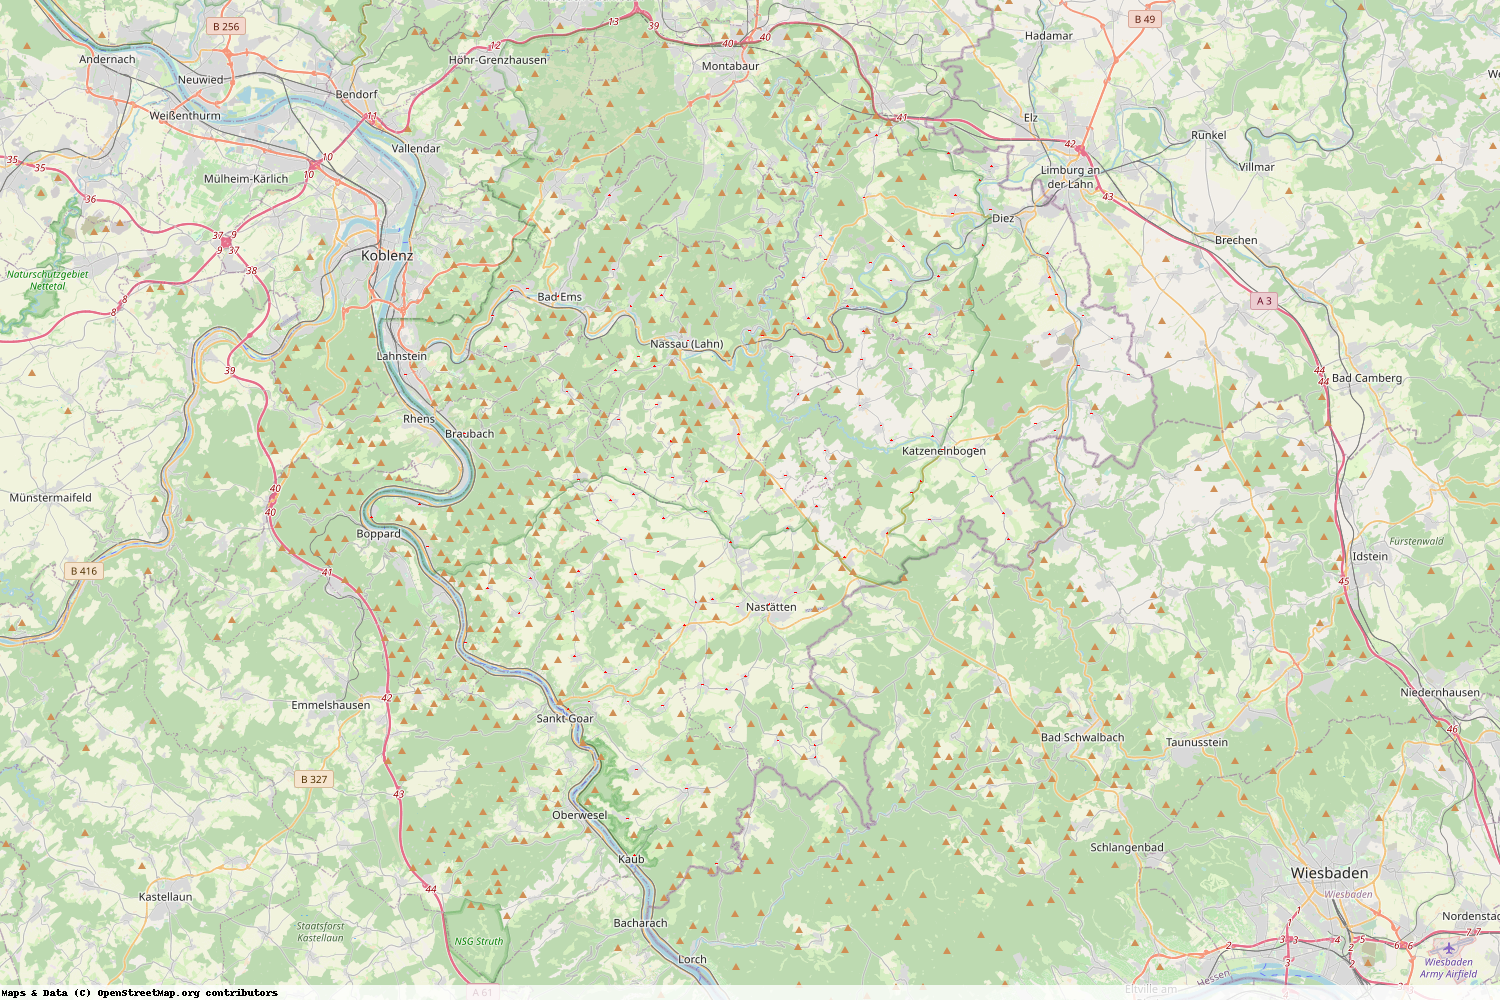 Ist gerade Stromausfall in Rheinland-Pfalz - Rhein-Lahn-Kreis?